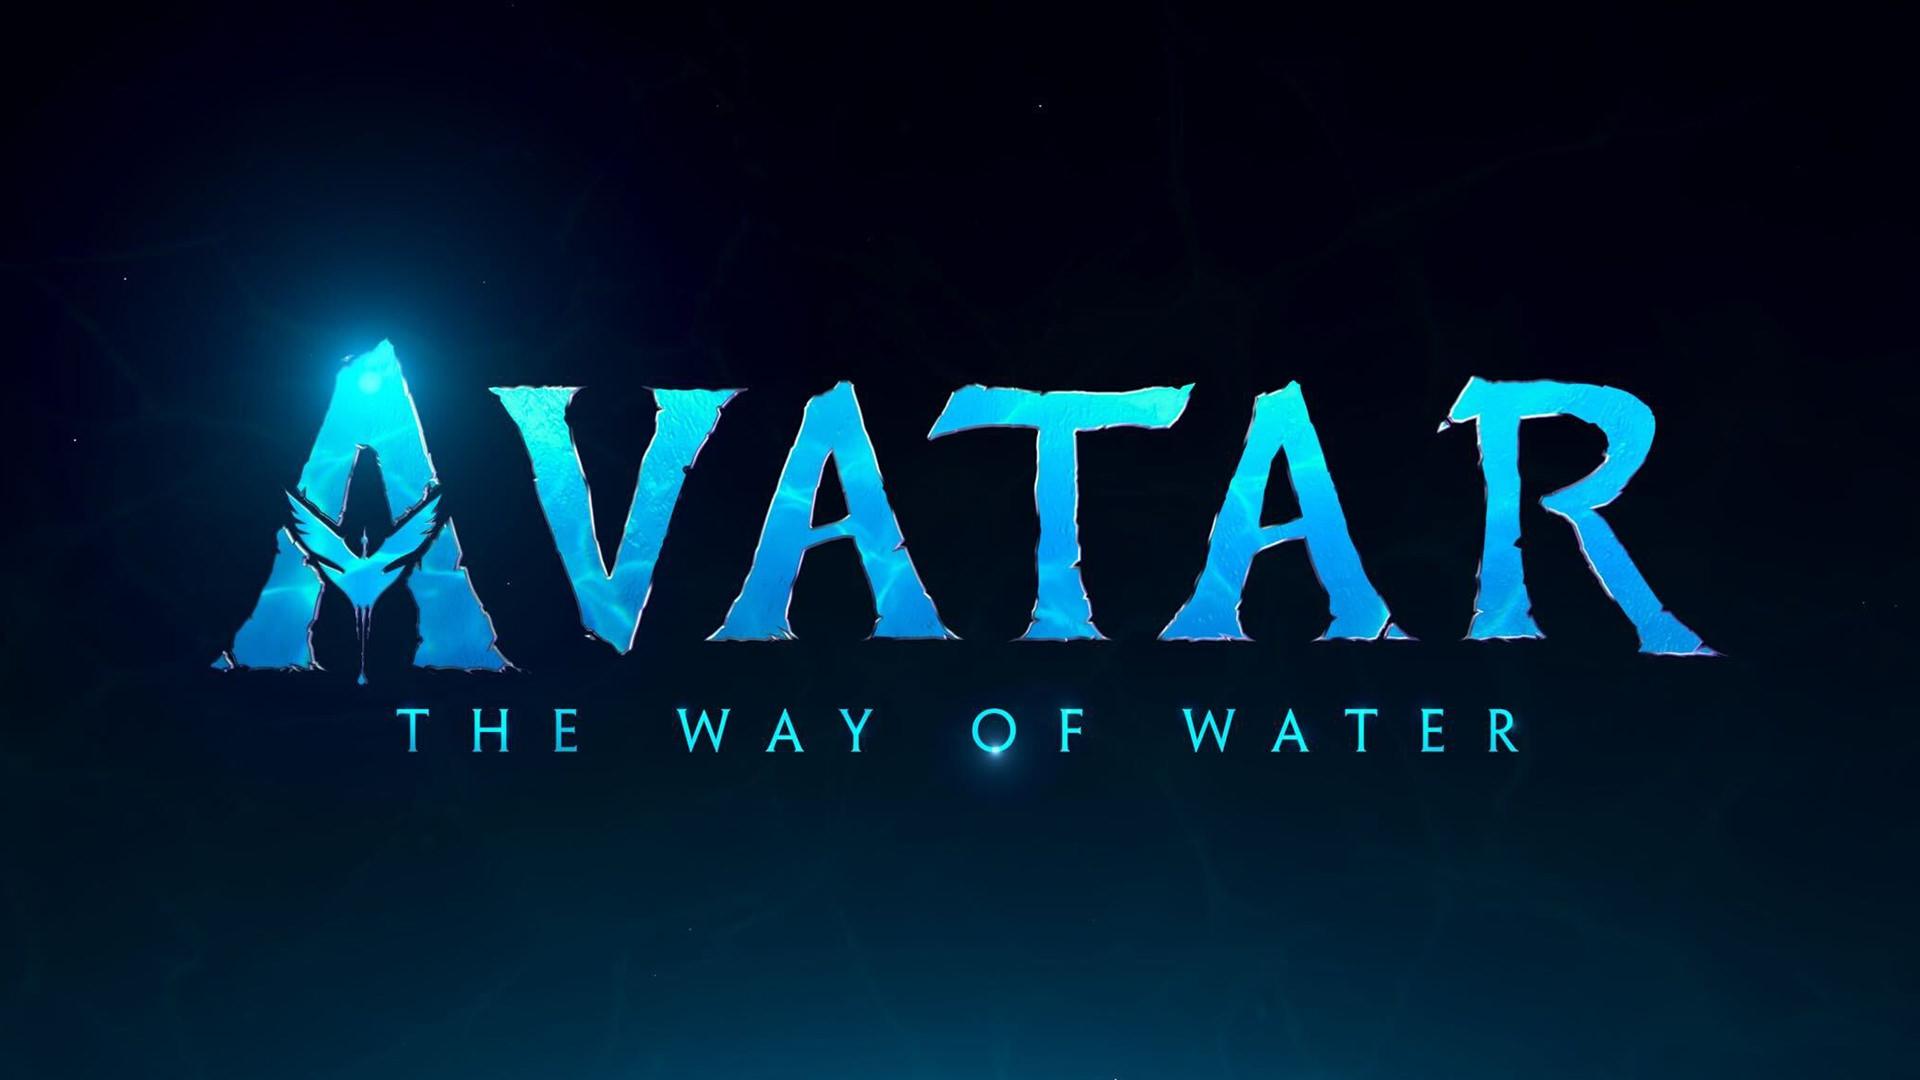 لوگو رسمی فیلم Avatar: The Way of Water